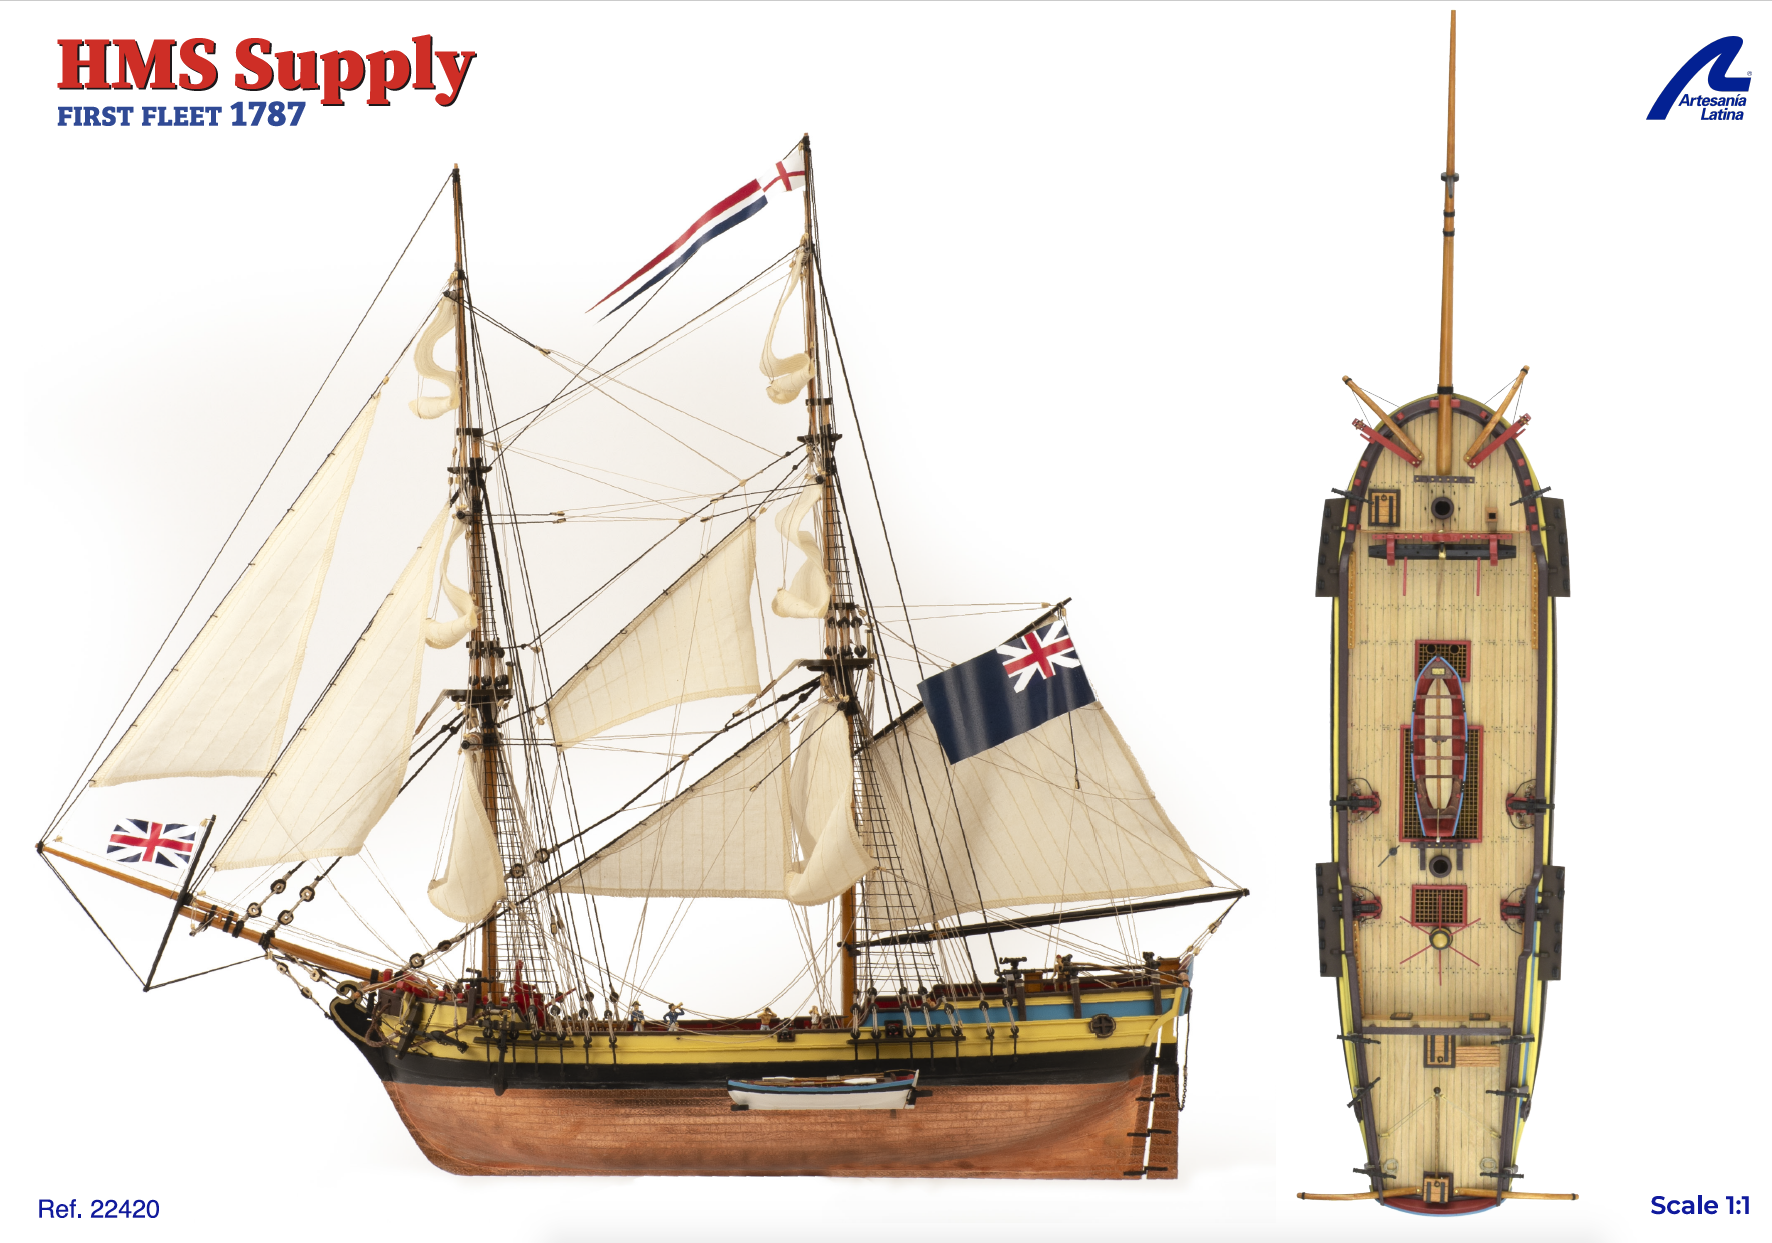 Plan of HMS Supply Model Ship Kit in Wood, First Fleet Edition 1787 (22420) by Artesanía Latina.